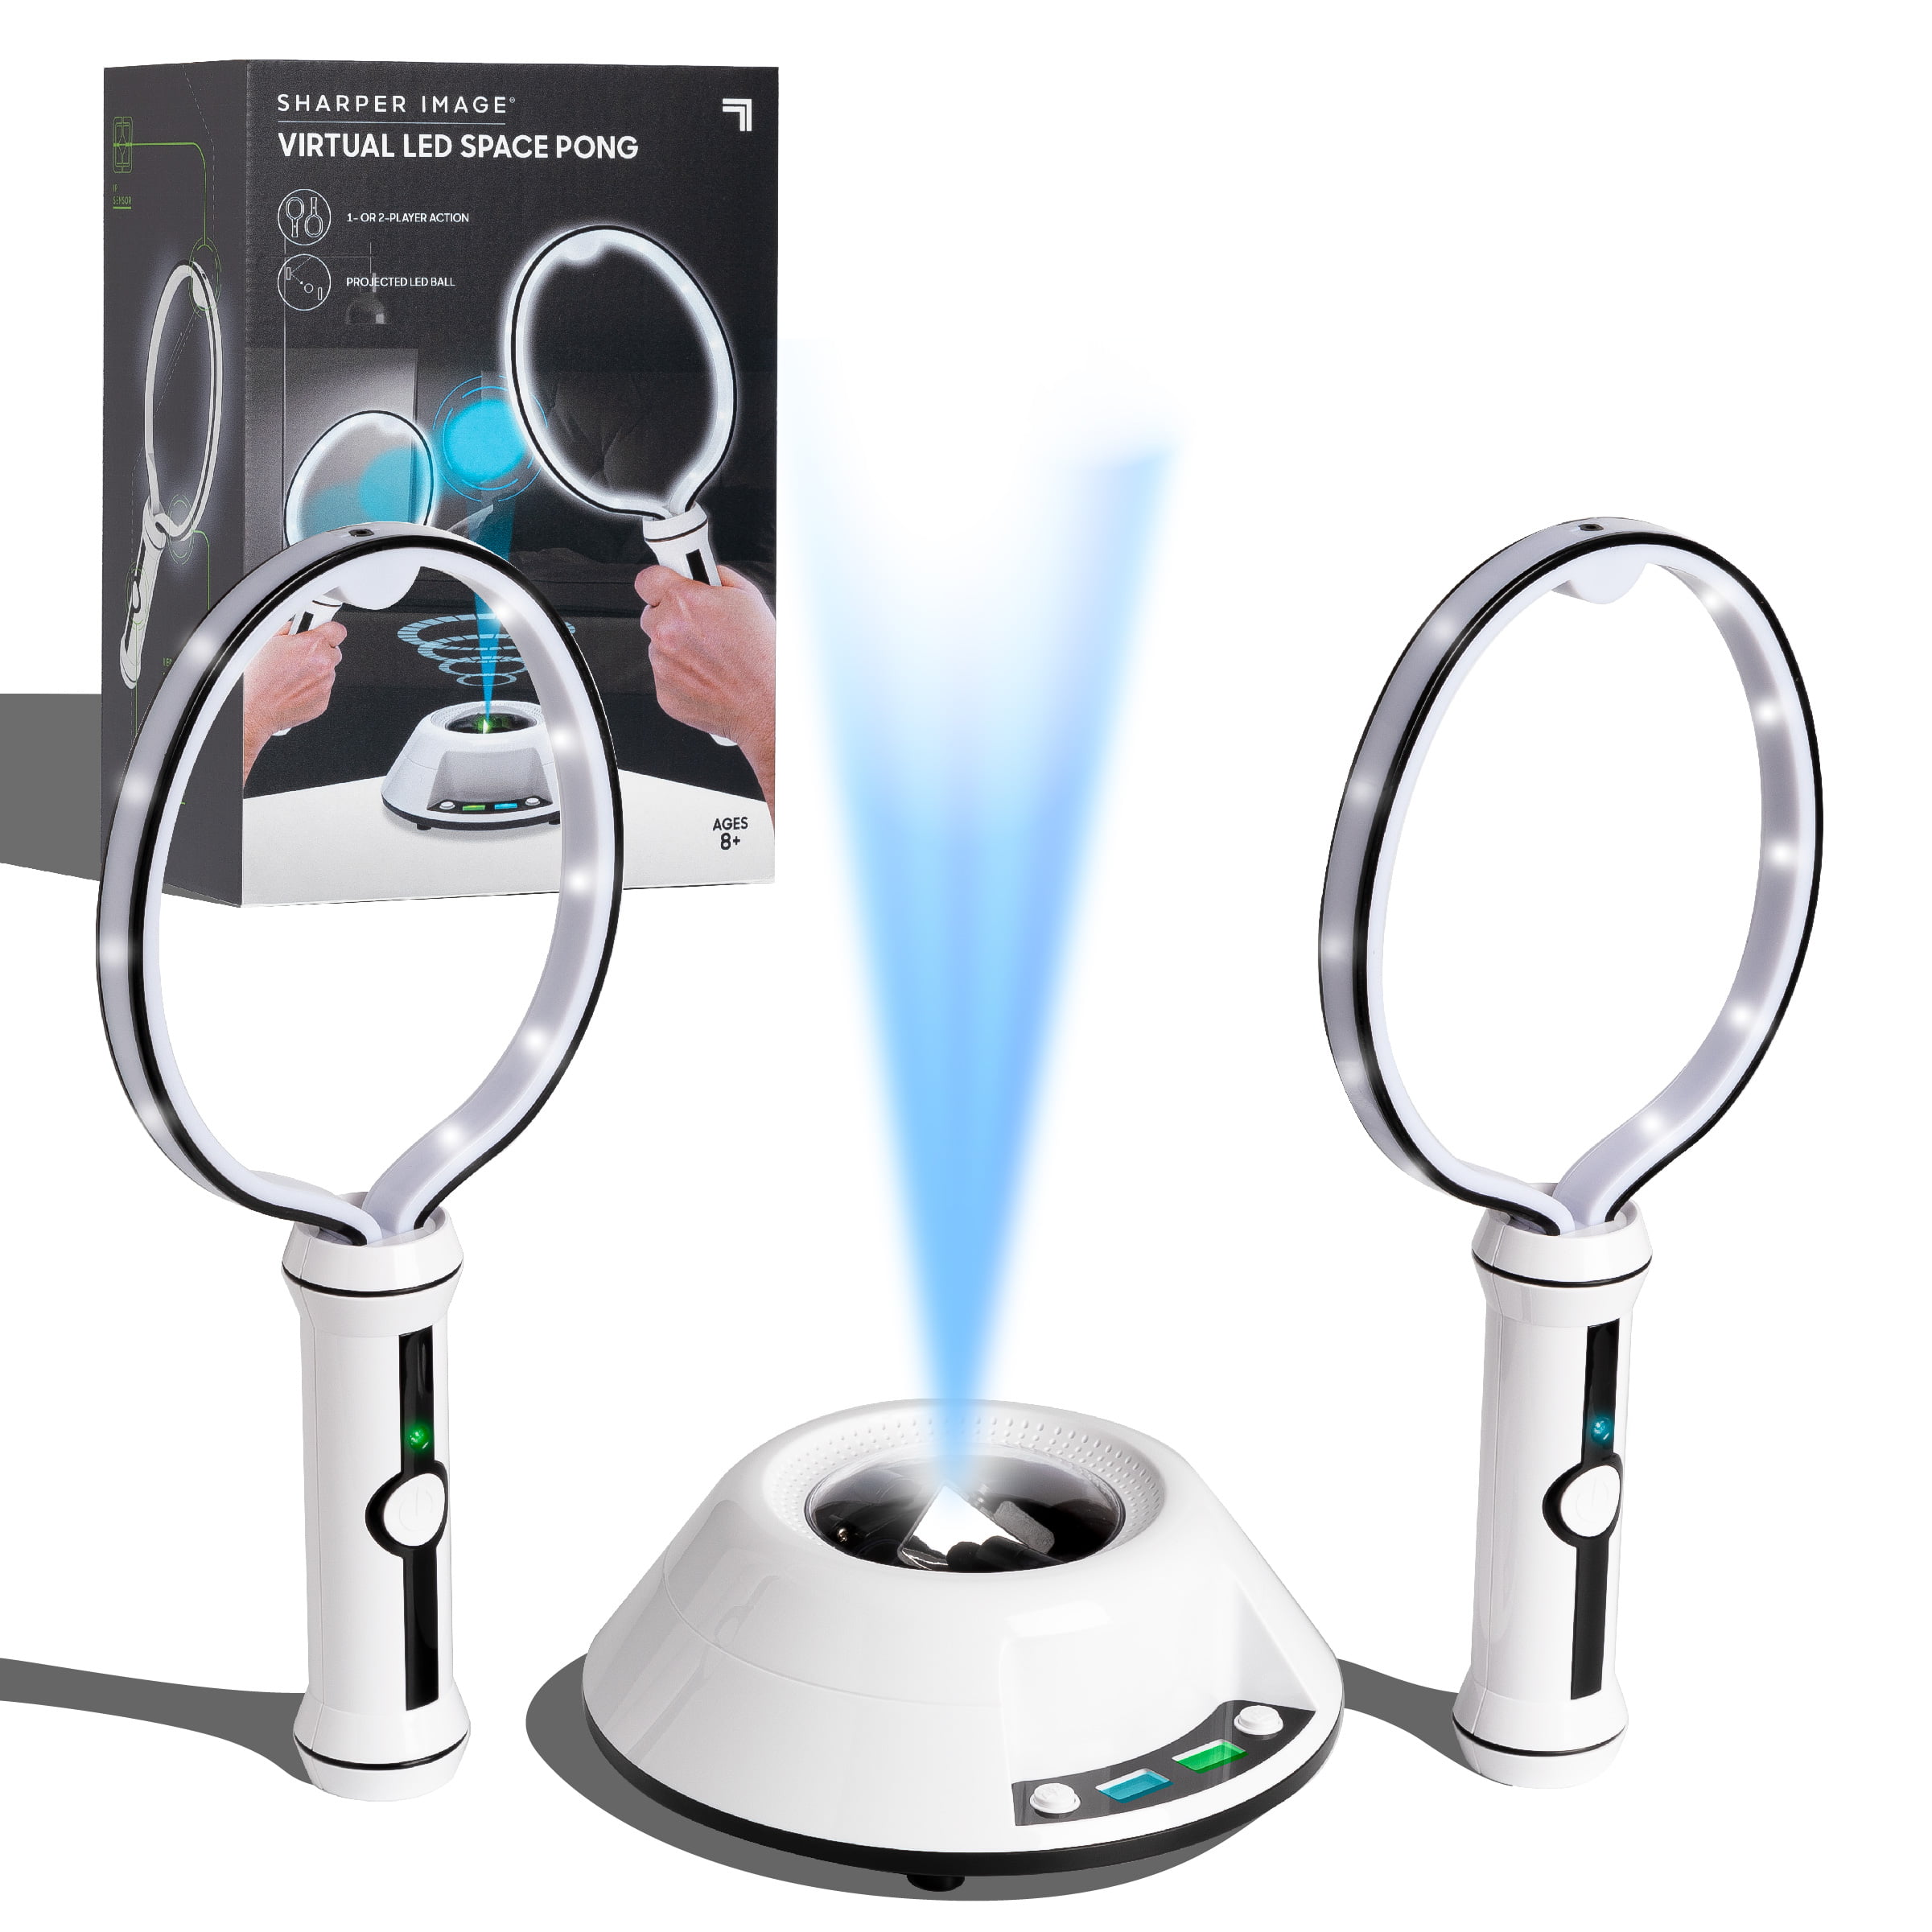 Sharper Image Virtual LED Space Pong 1 or 2 Player Action 2019 Blue Light for sale online 